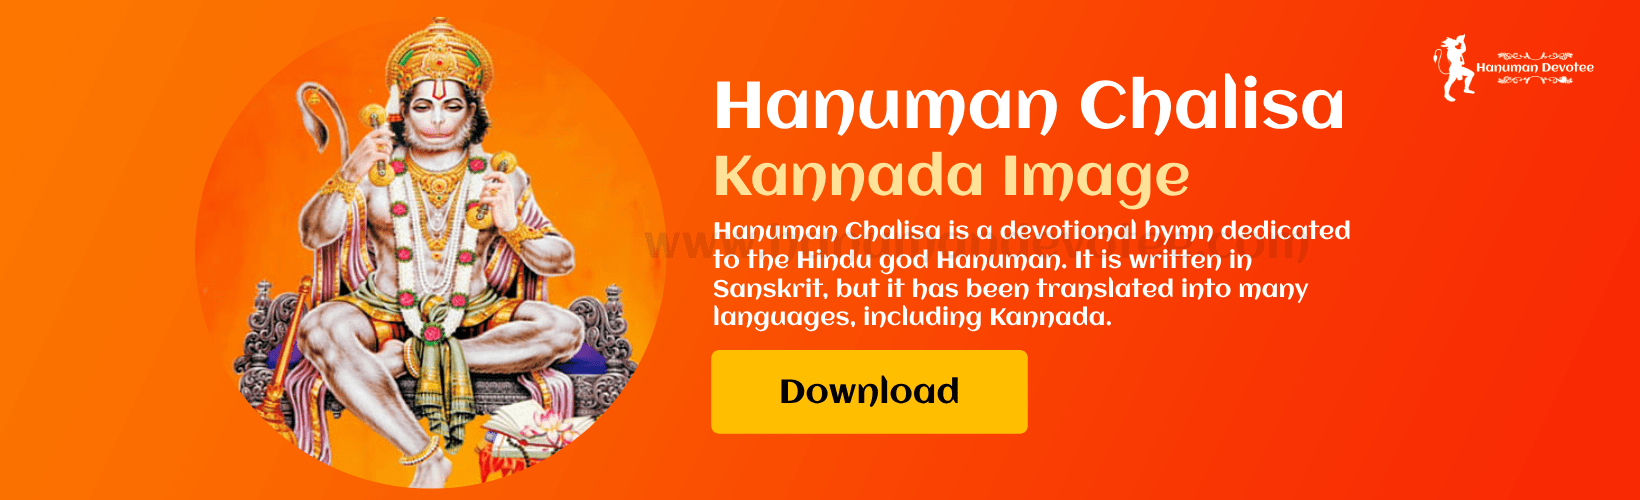 HD Image for Hanuman Chalisa in Kannada